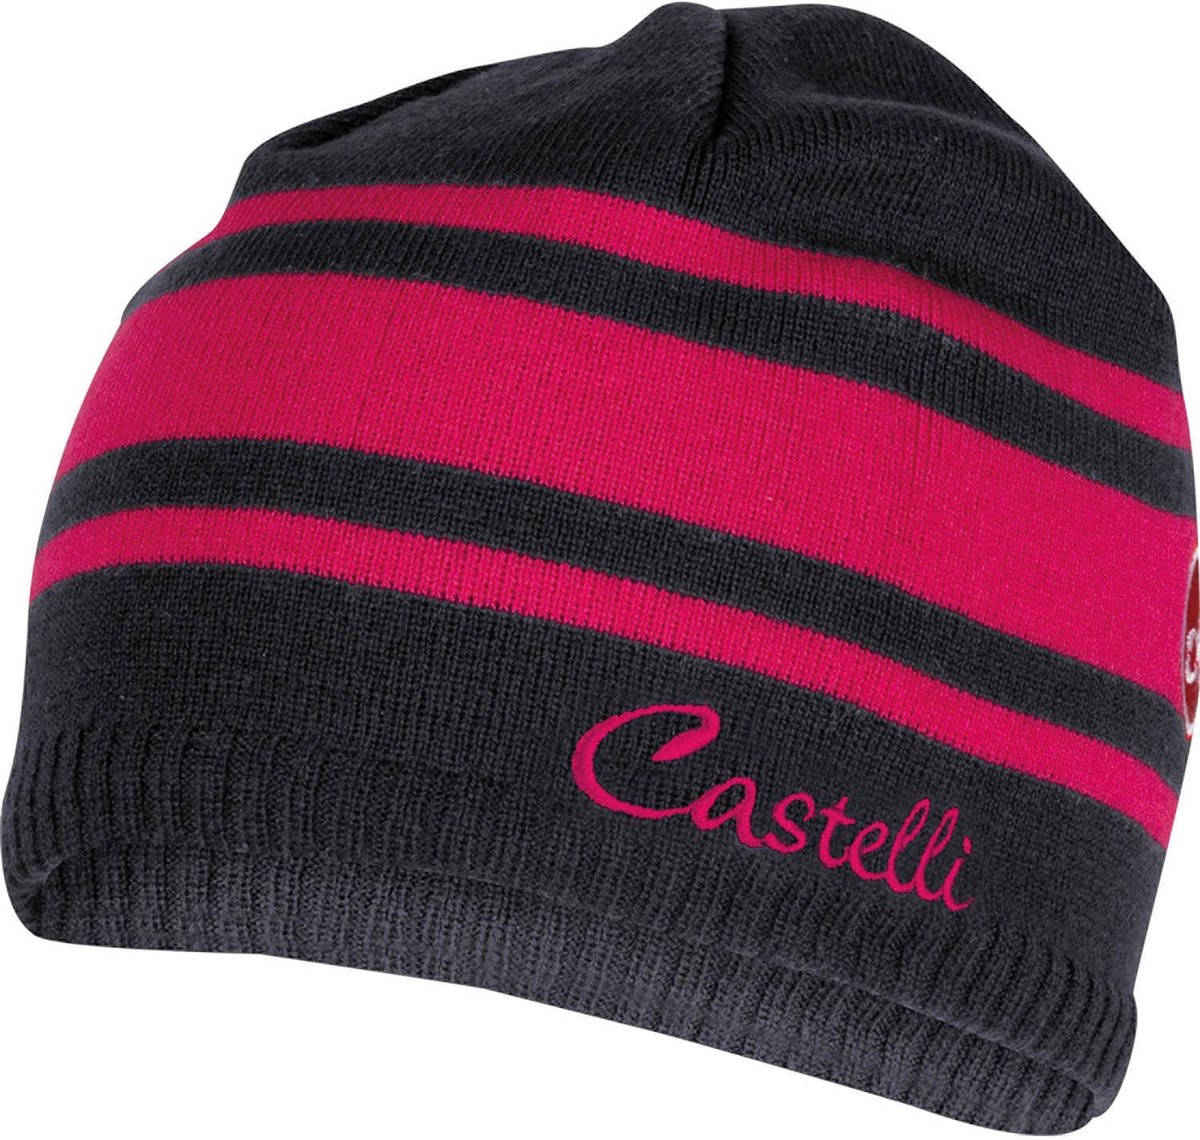 Castelli Knit Cap / Beanie product image